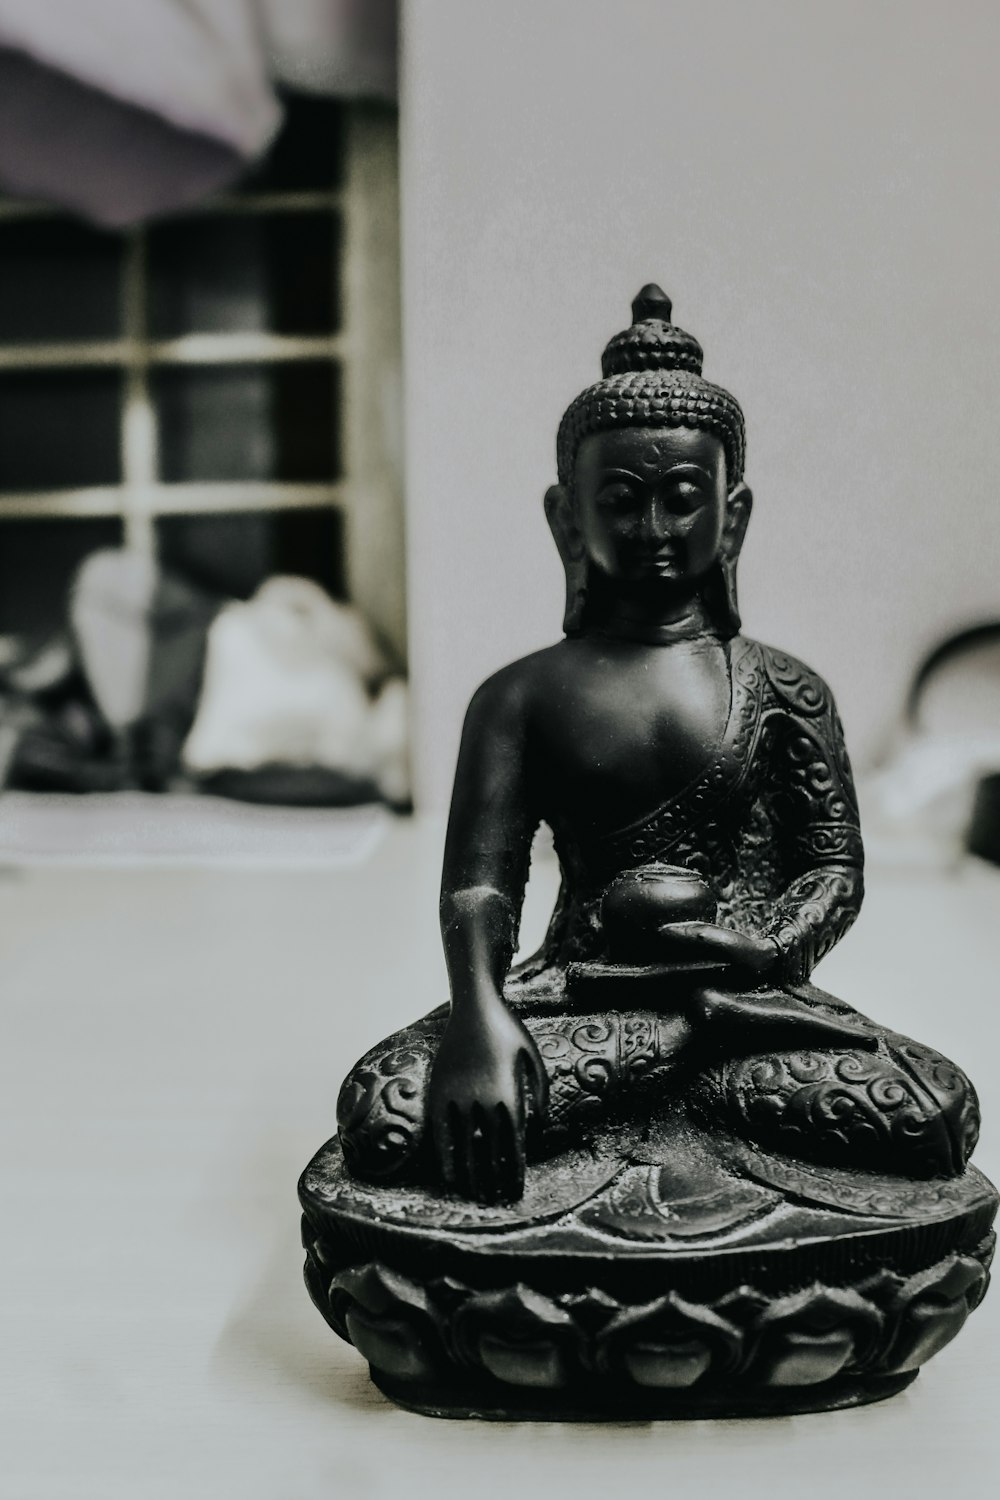 black ceramic buddha figurine on white table